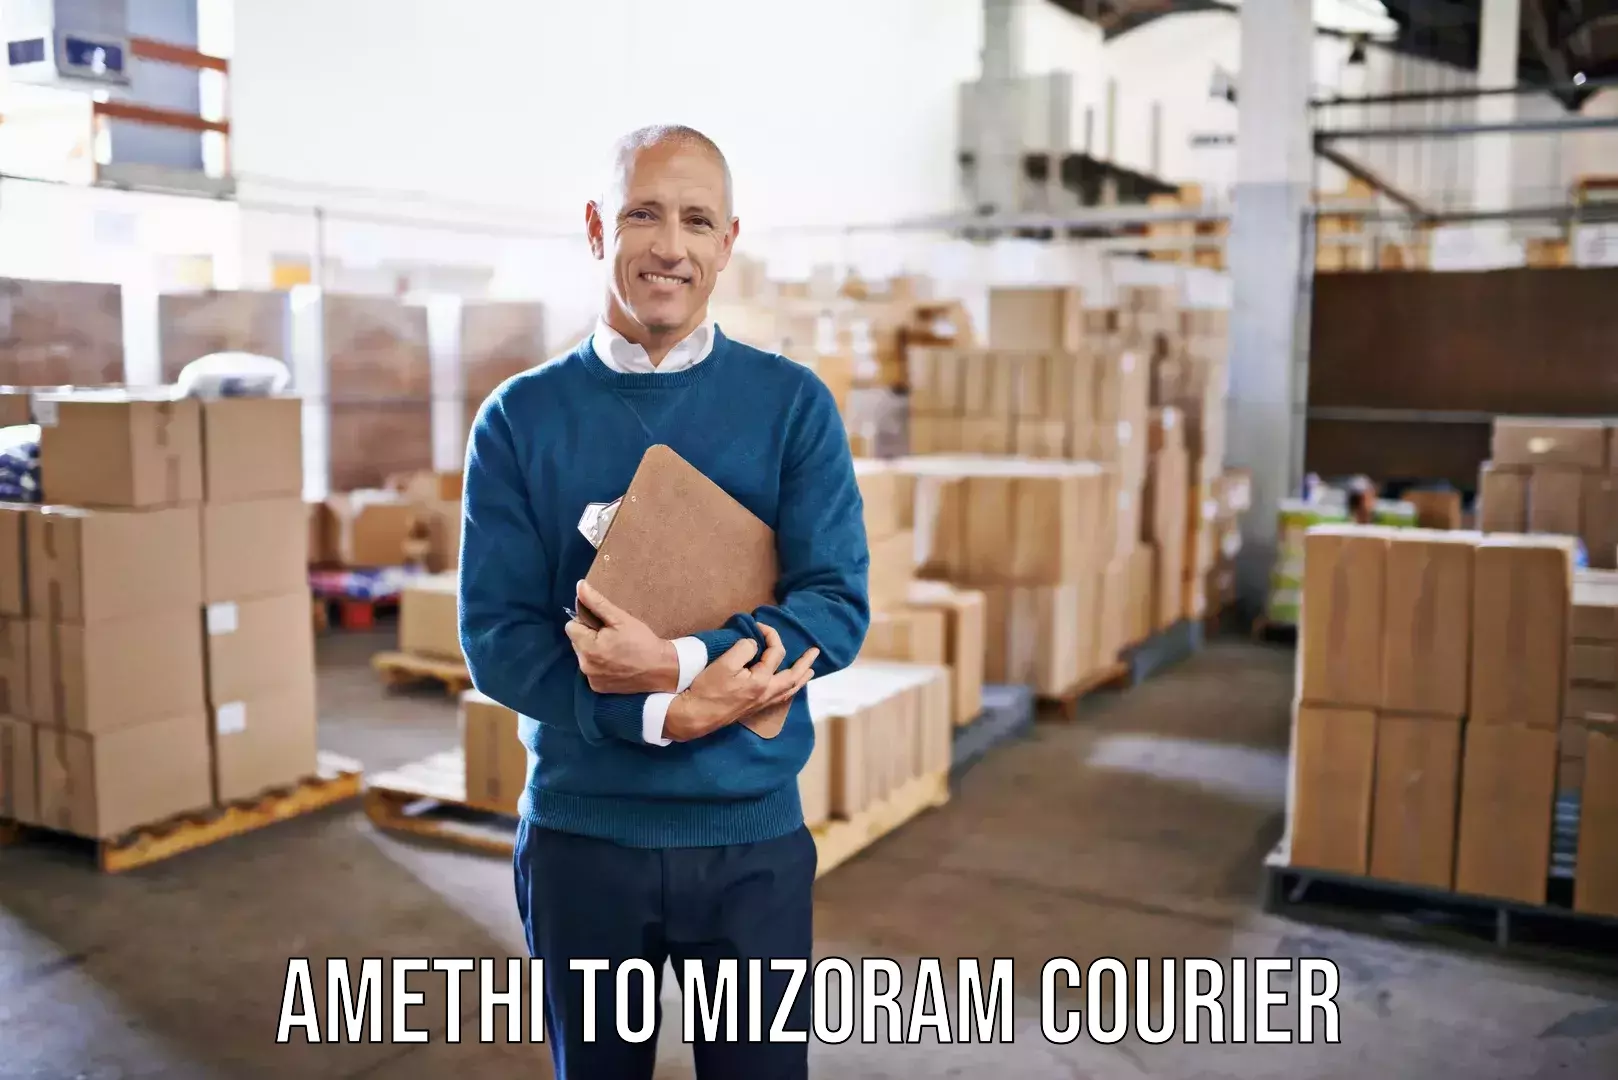 Quality moving company Amethi to Mizoram